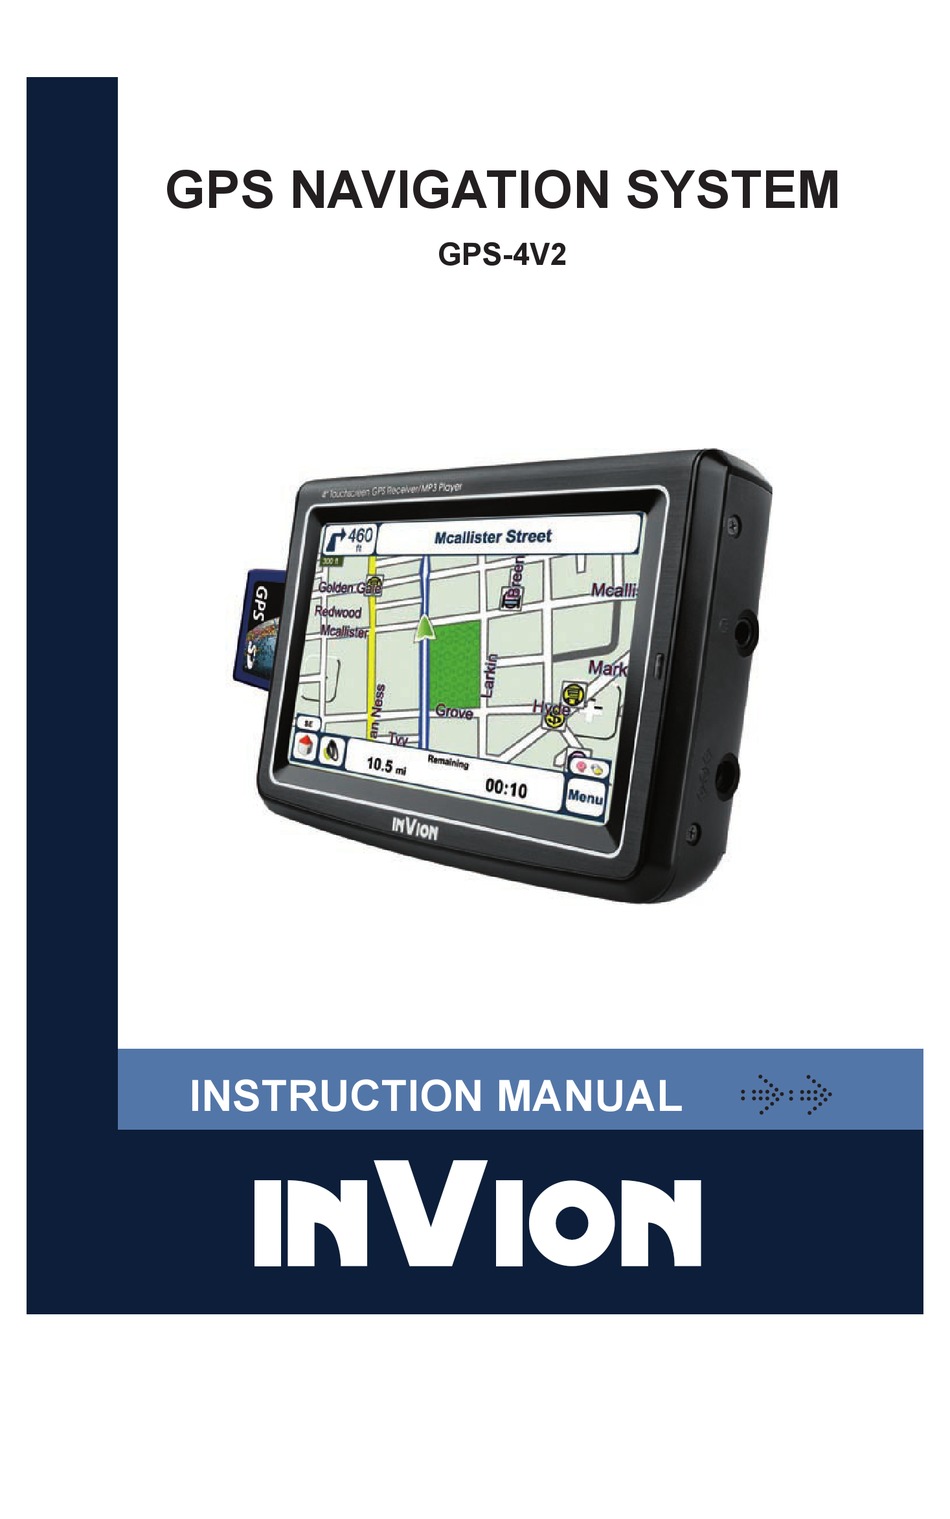 Map Manager Menu Invion Instruction Manual 12] | ManualsLib